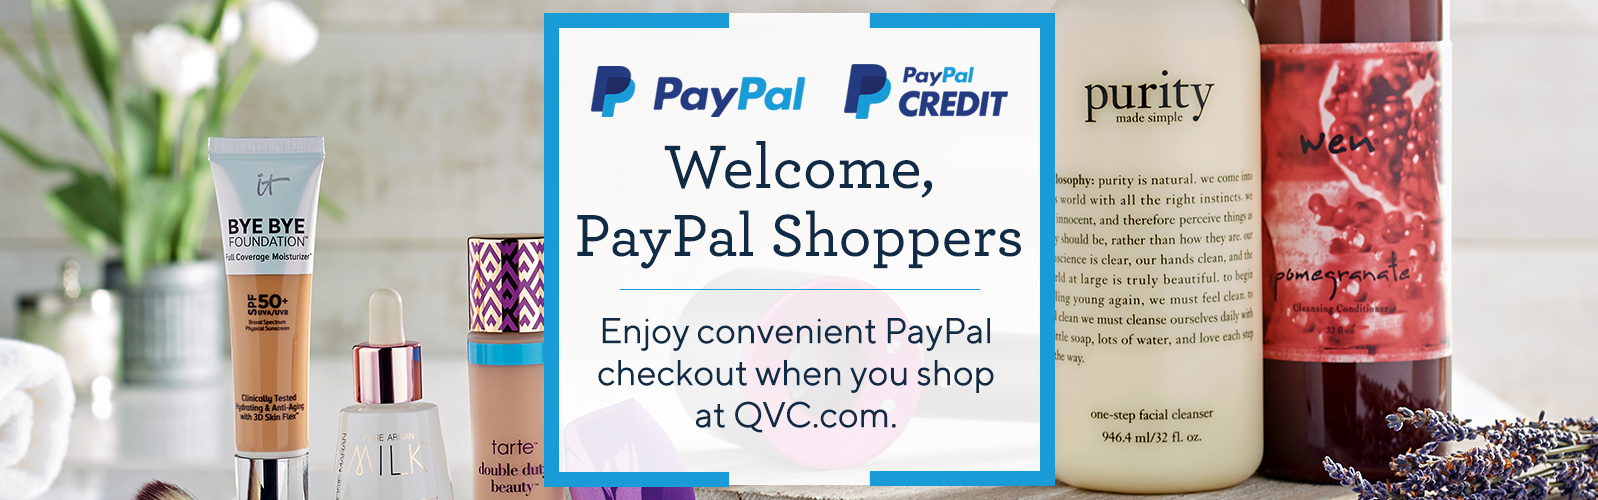 Welcome, PayPal Shoppers!  Enjoy convenient PayPal checkout when you shop at QVC.com. 